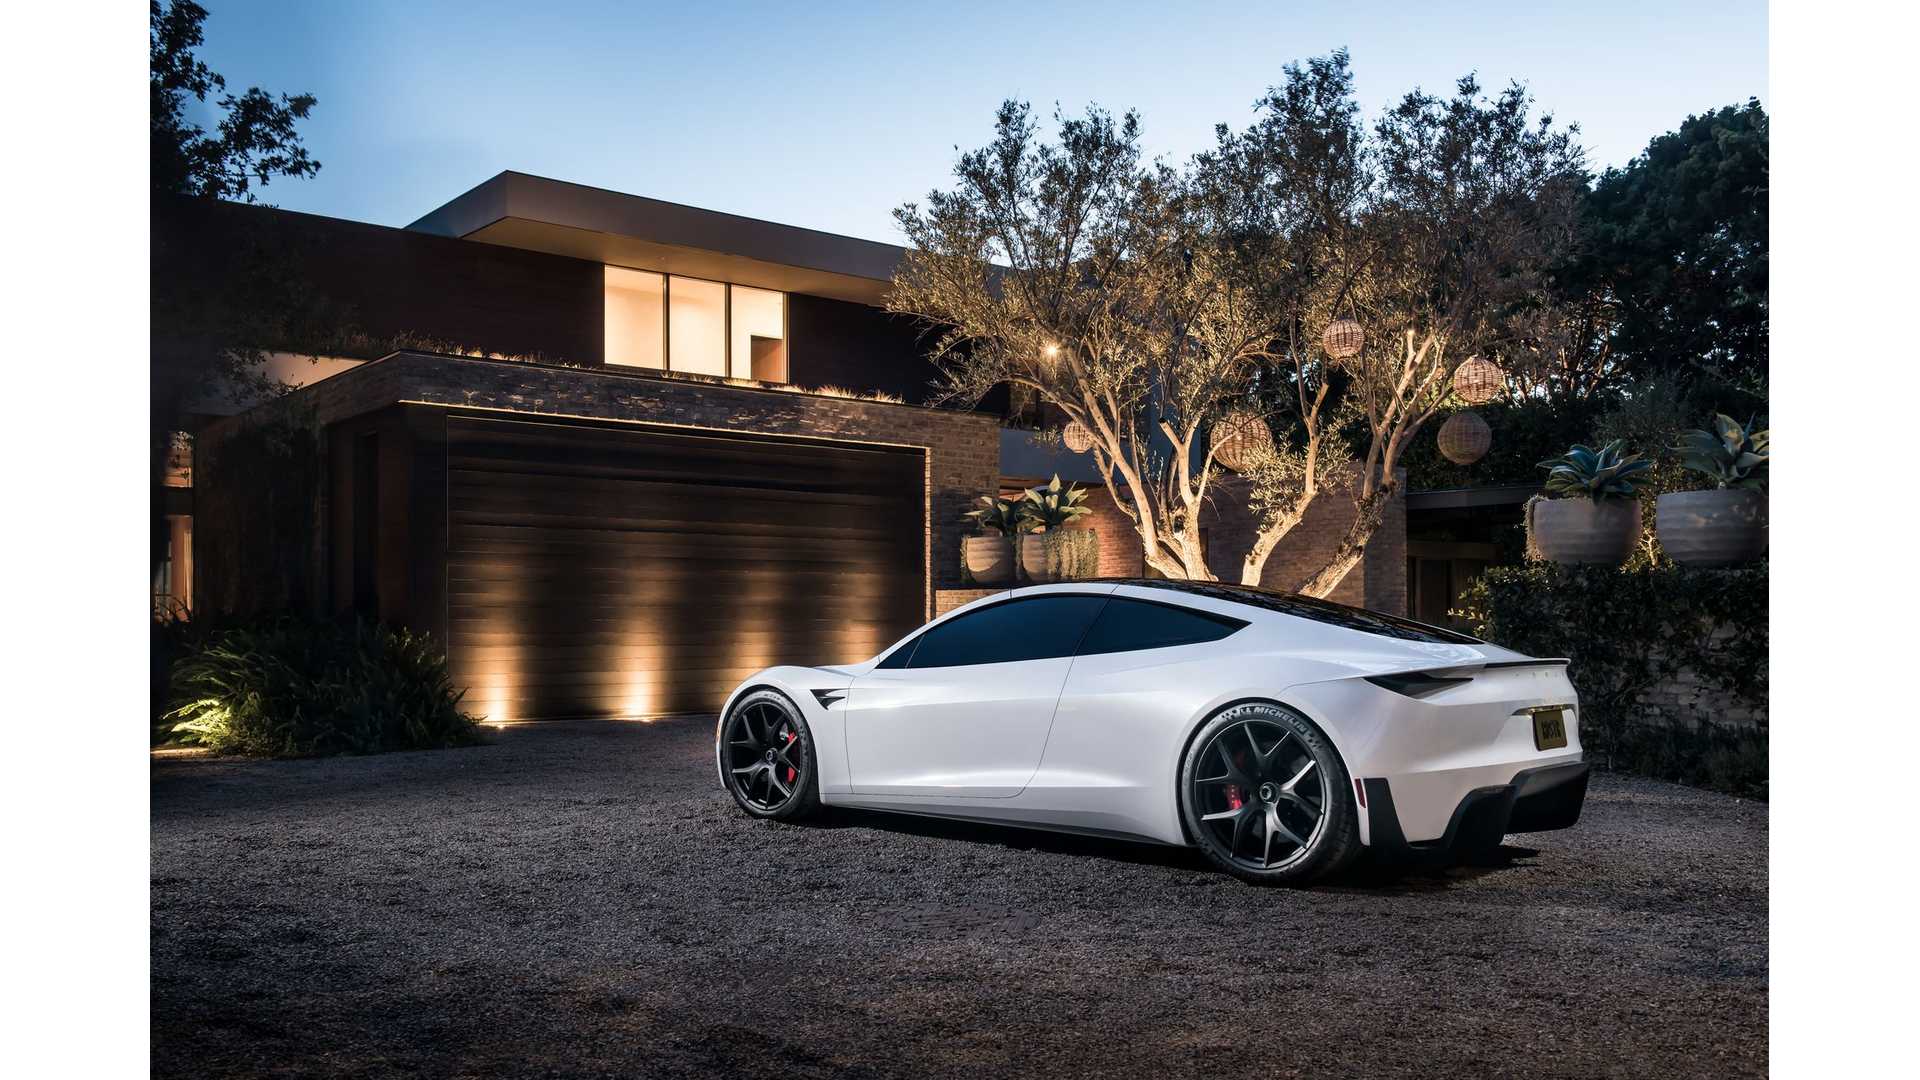 Tesla Roadster Delights Us In New Images Wallpaper Video